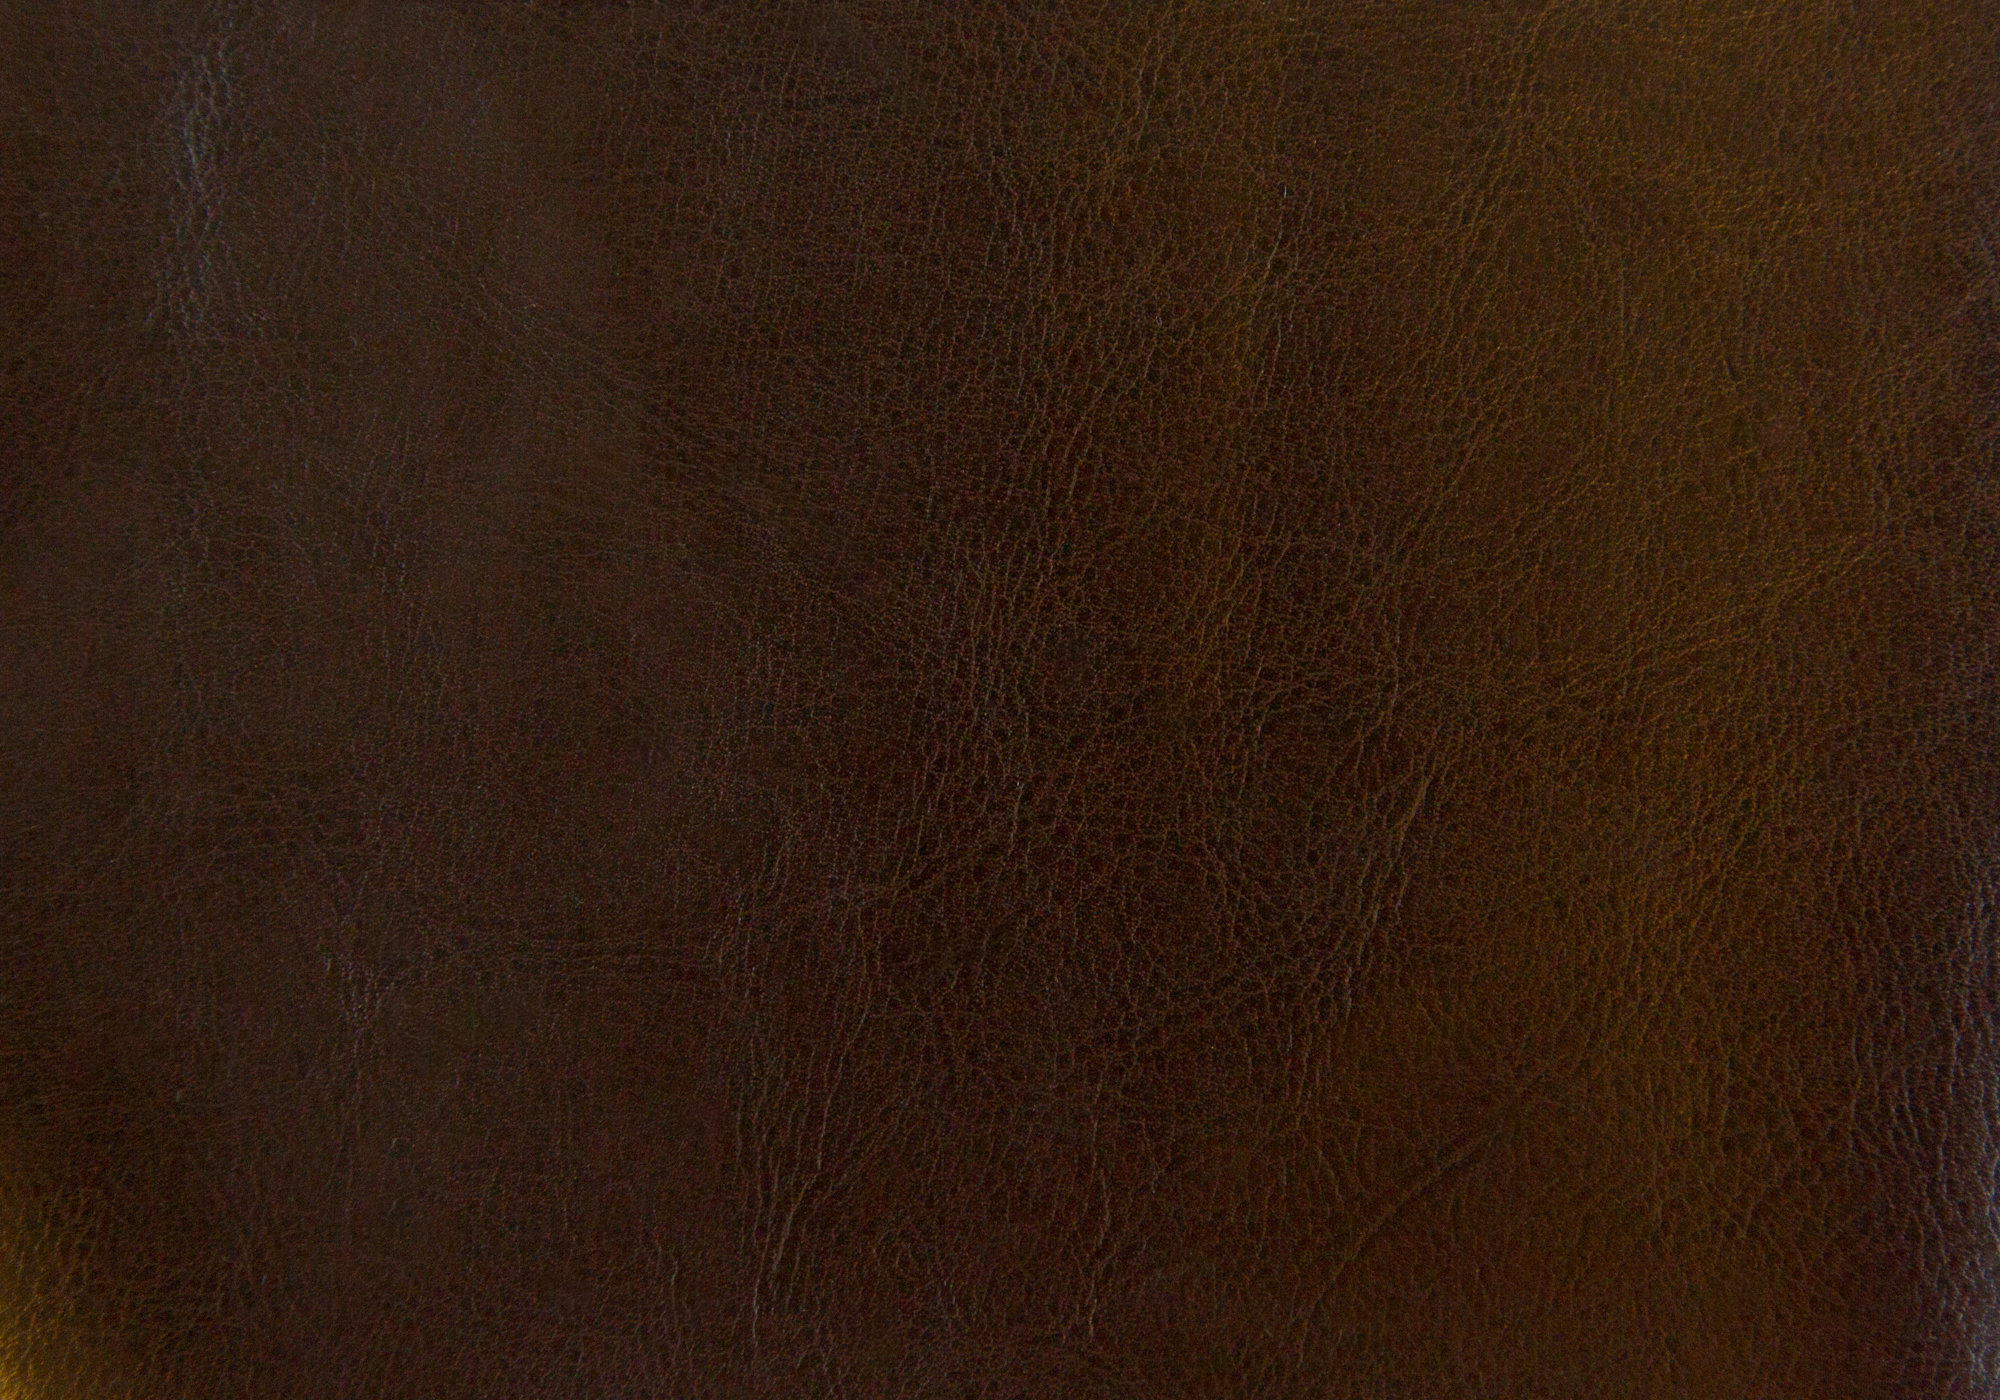 16.75" x 16.75" x 17" Dark Brown Leather Look Fabric Ottoman